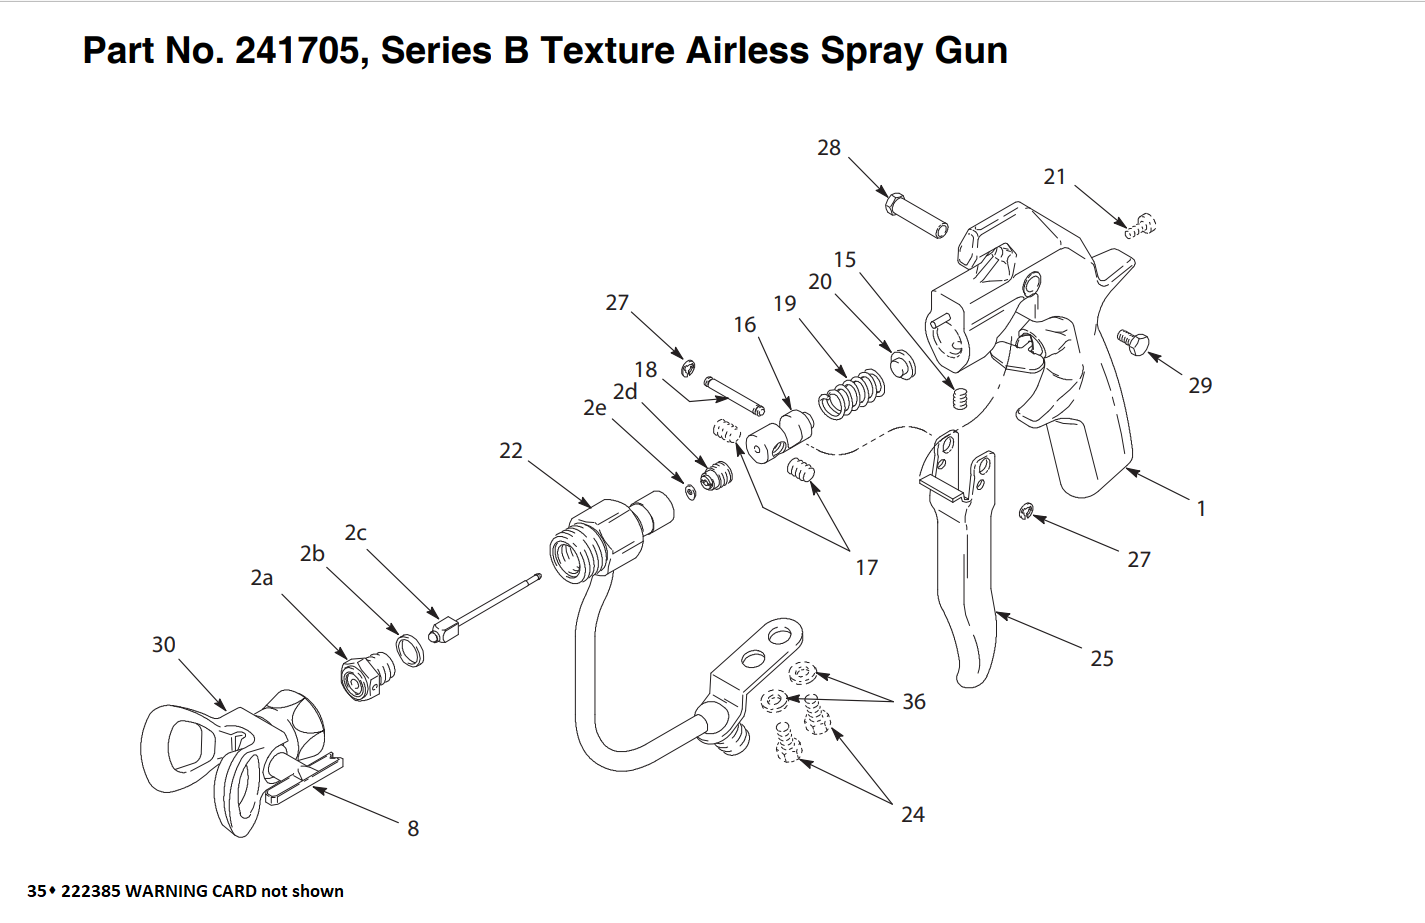 Graco 1095 Pro Contractor Series B Texture Airless Spray Gun